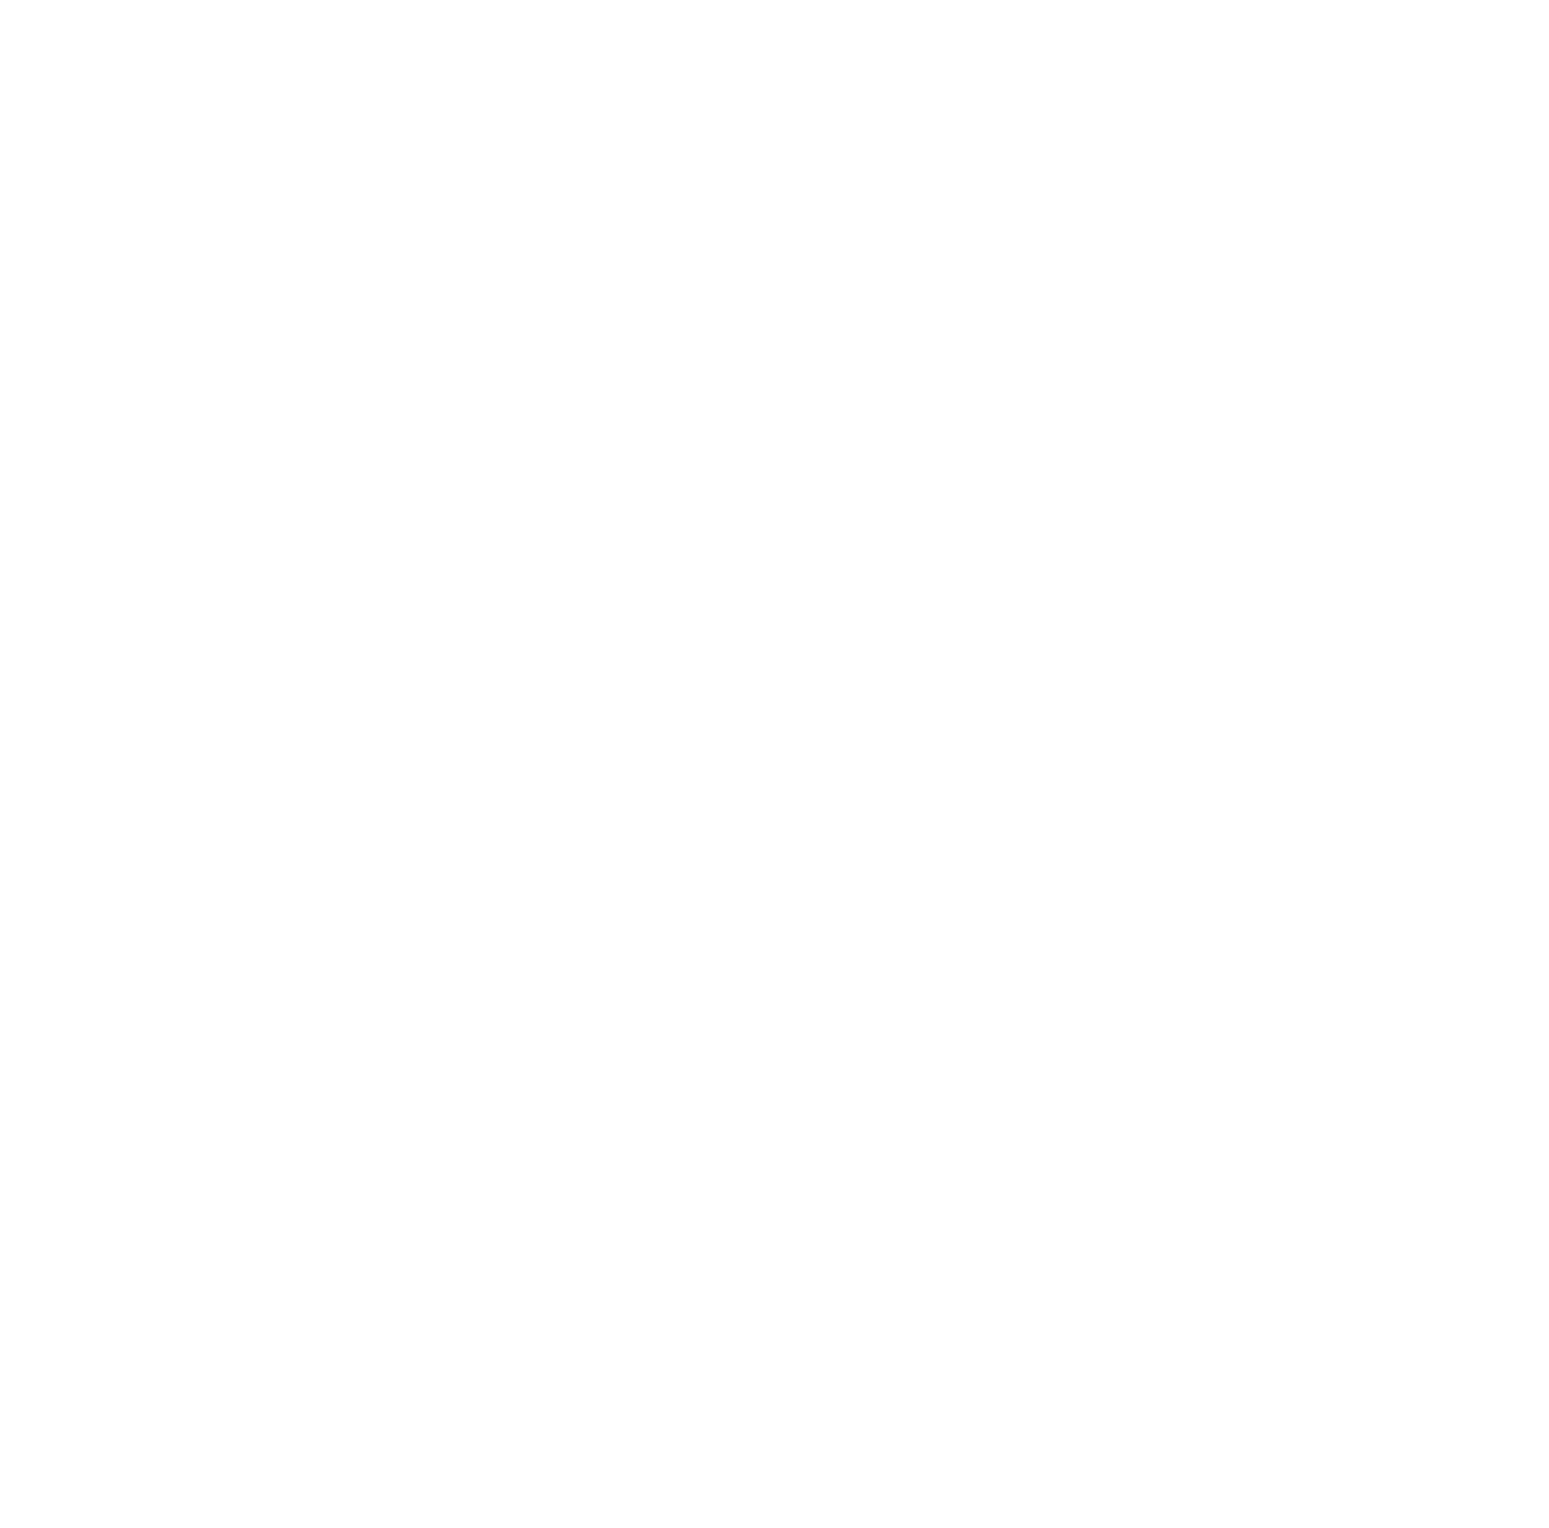 Verano Holdings logo pour fonds sombres (PNG transparent)